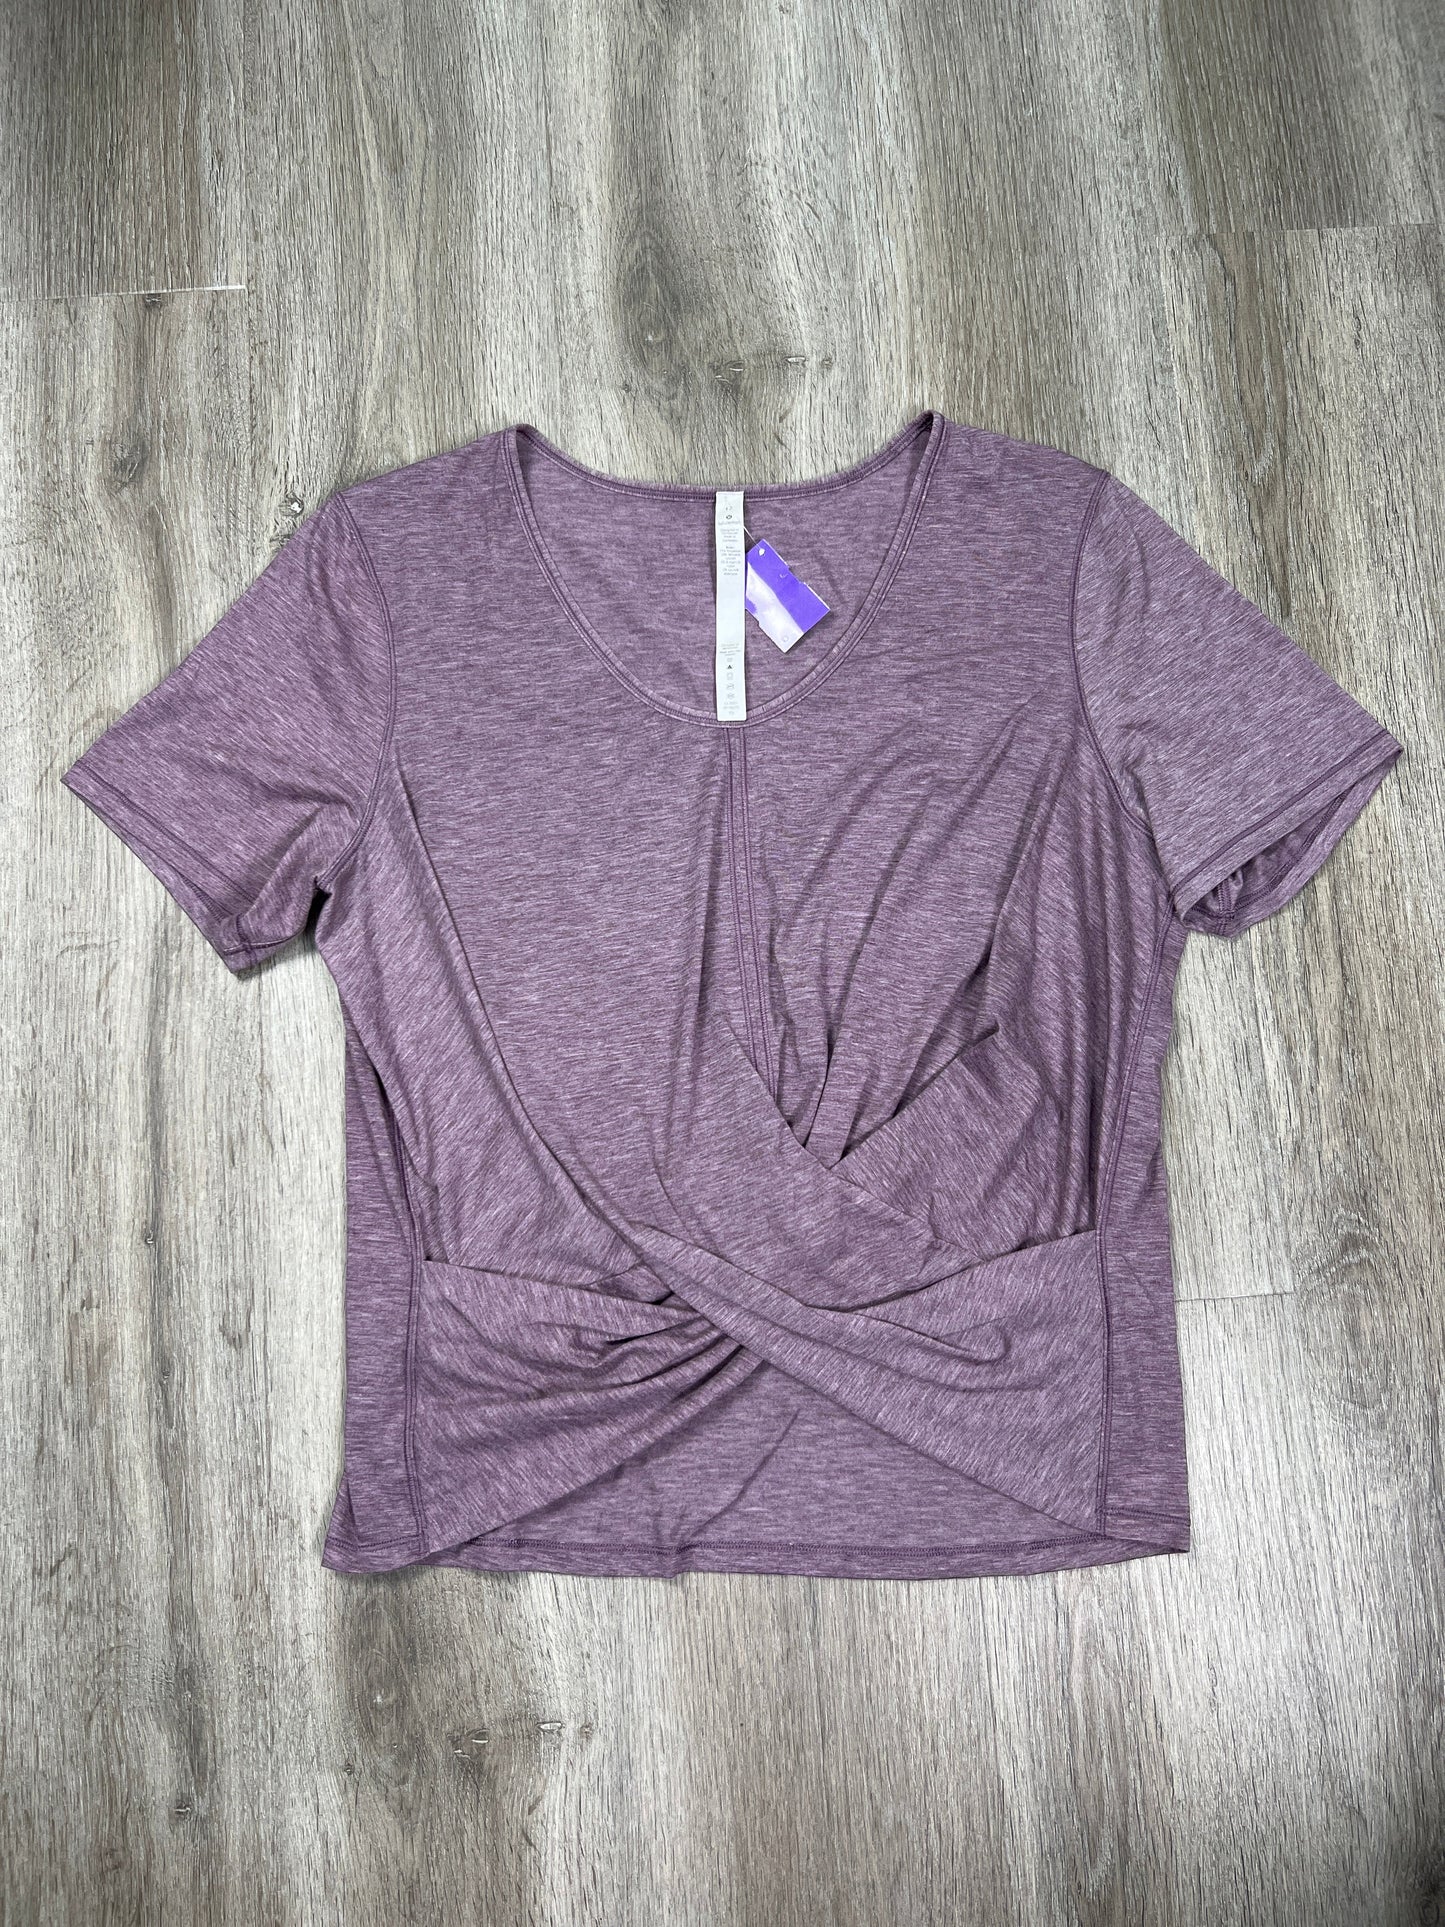 Purple Athletic Top Short Sleeve Lululemon, Size L